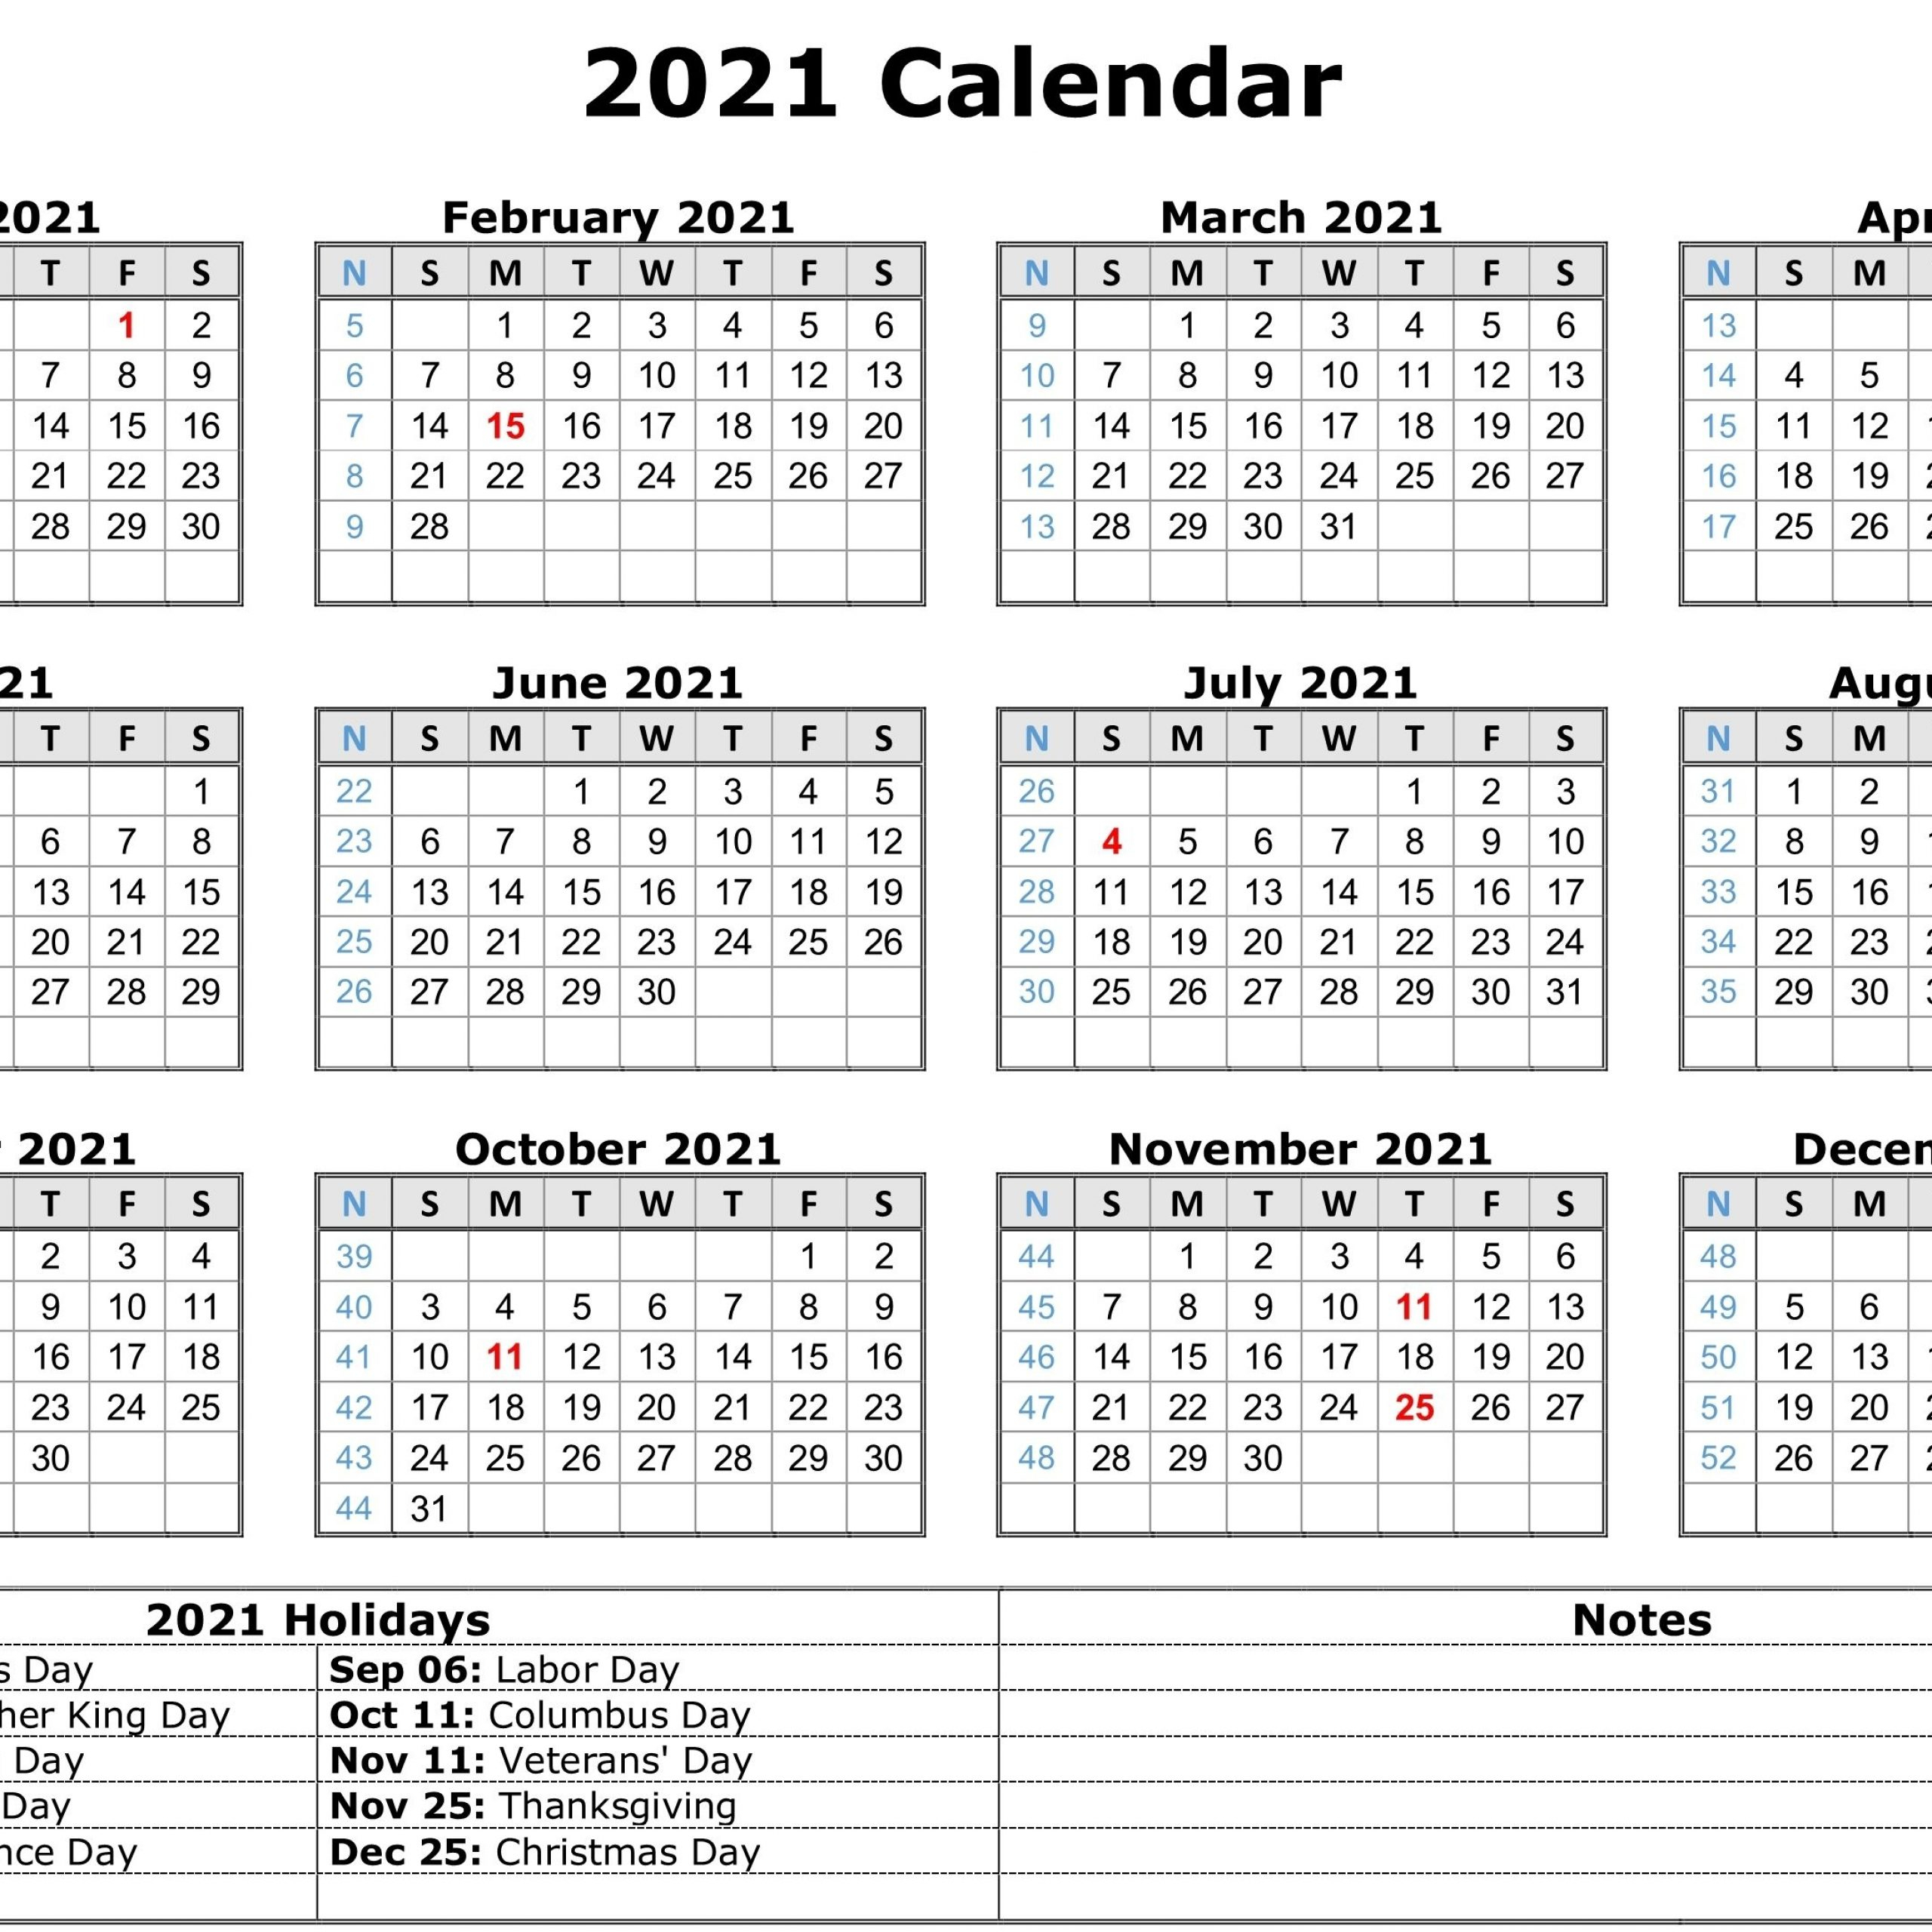 Calendar 2021 Philippines Holidays | Get Free Calendar